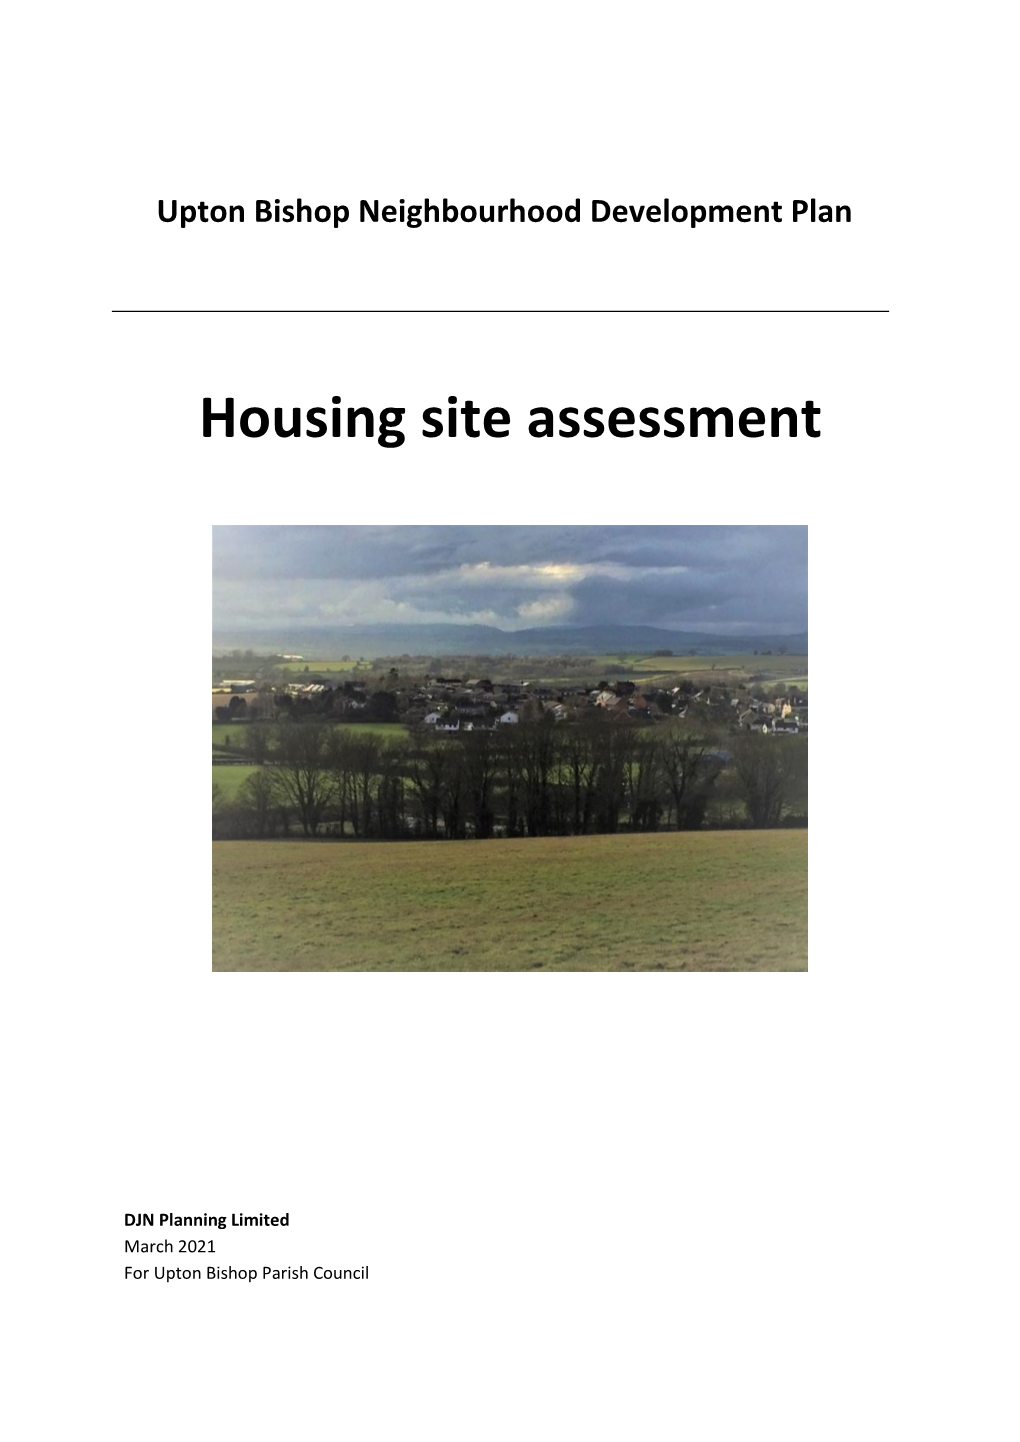 Housing Site Assessment